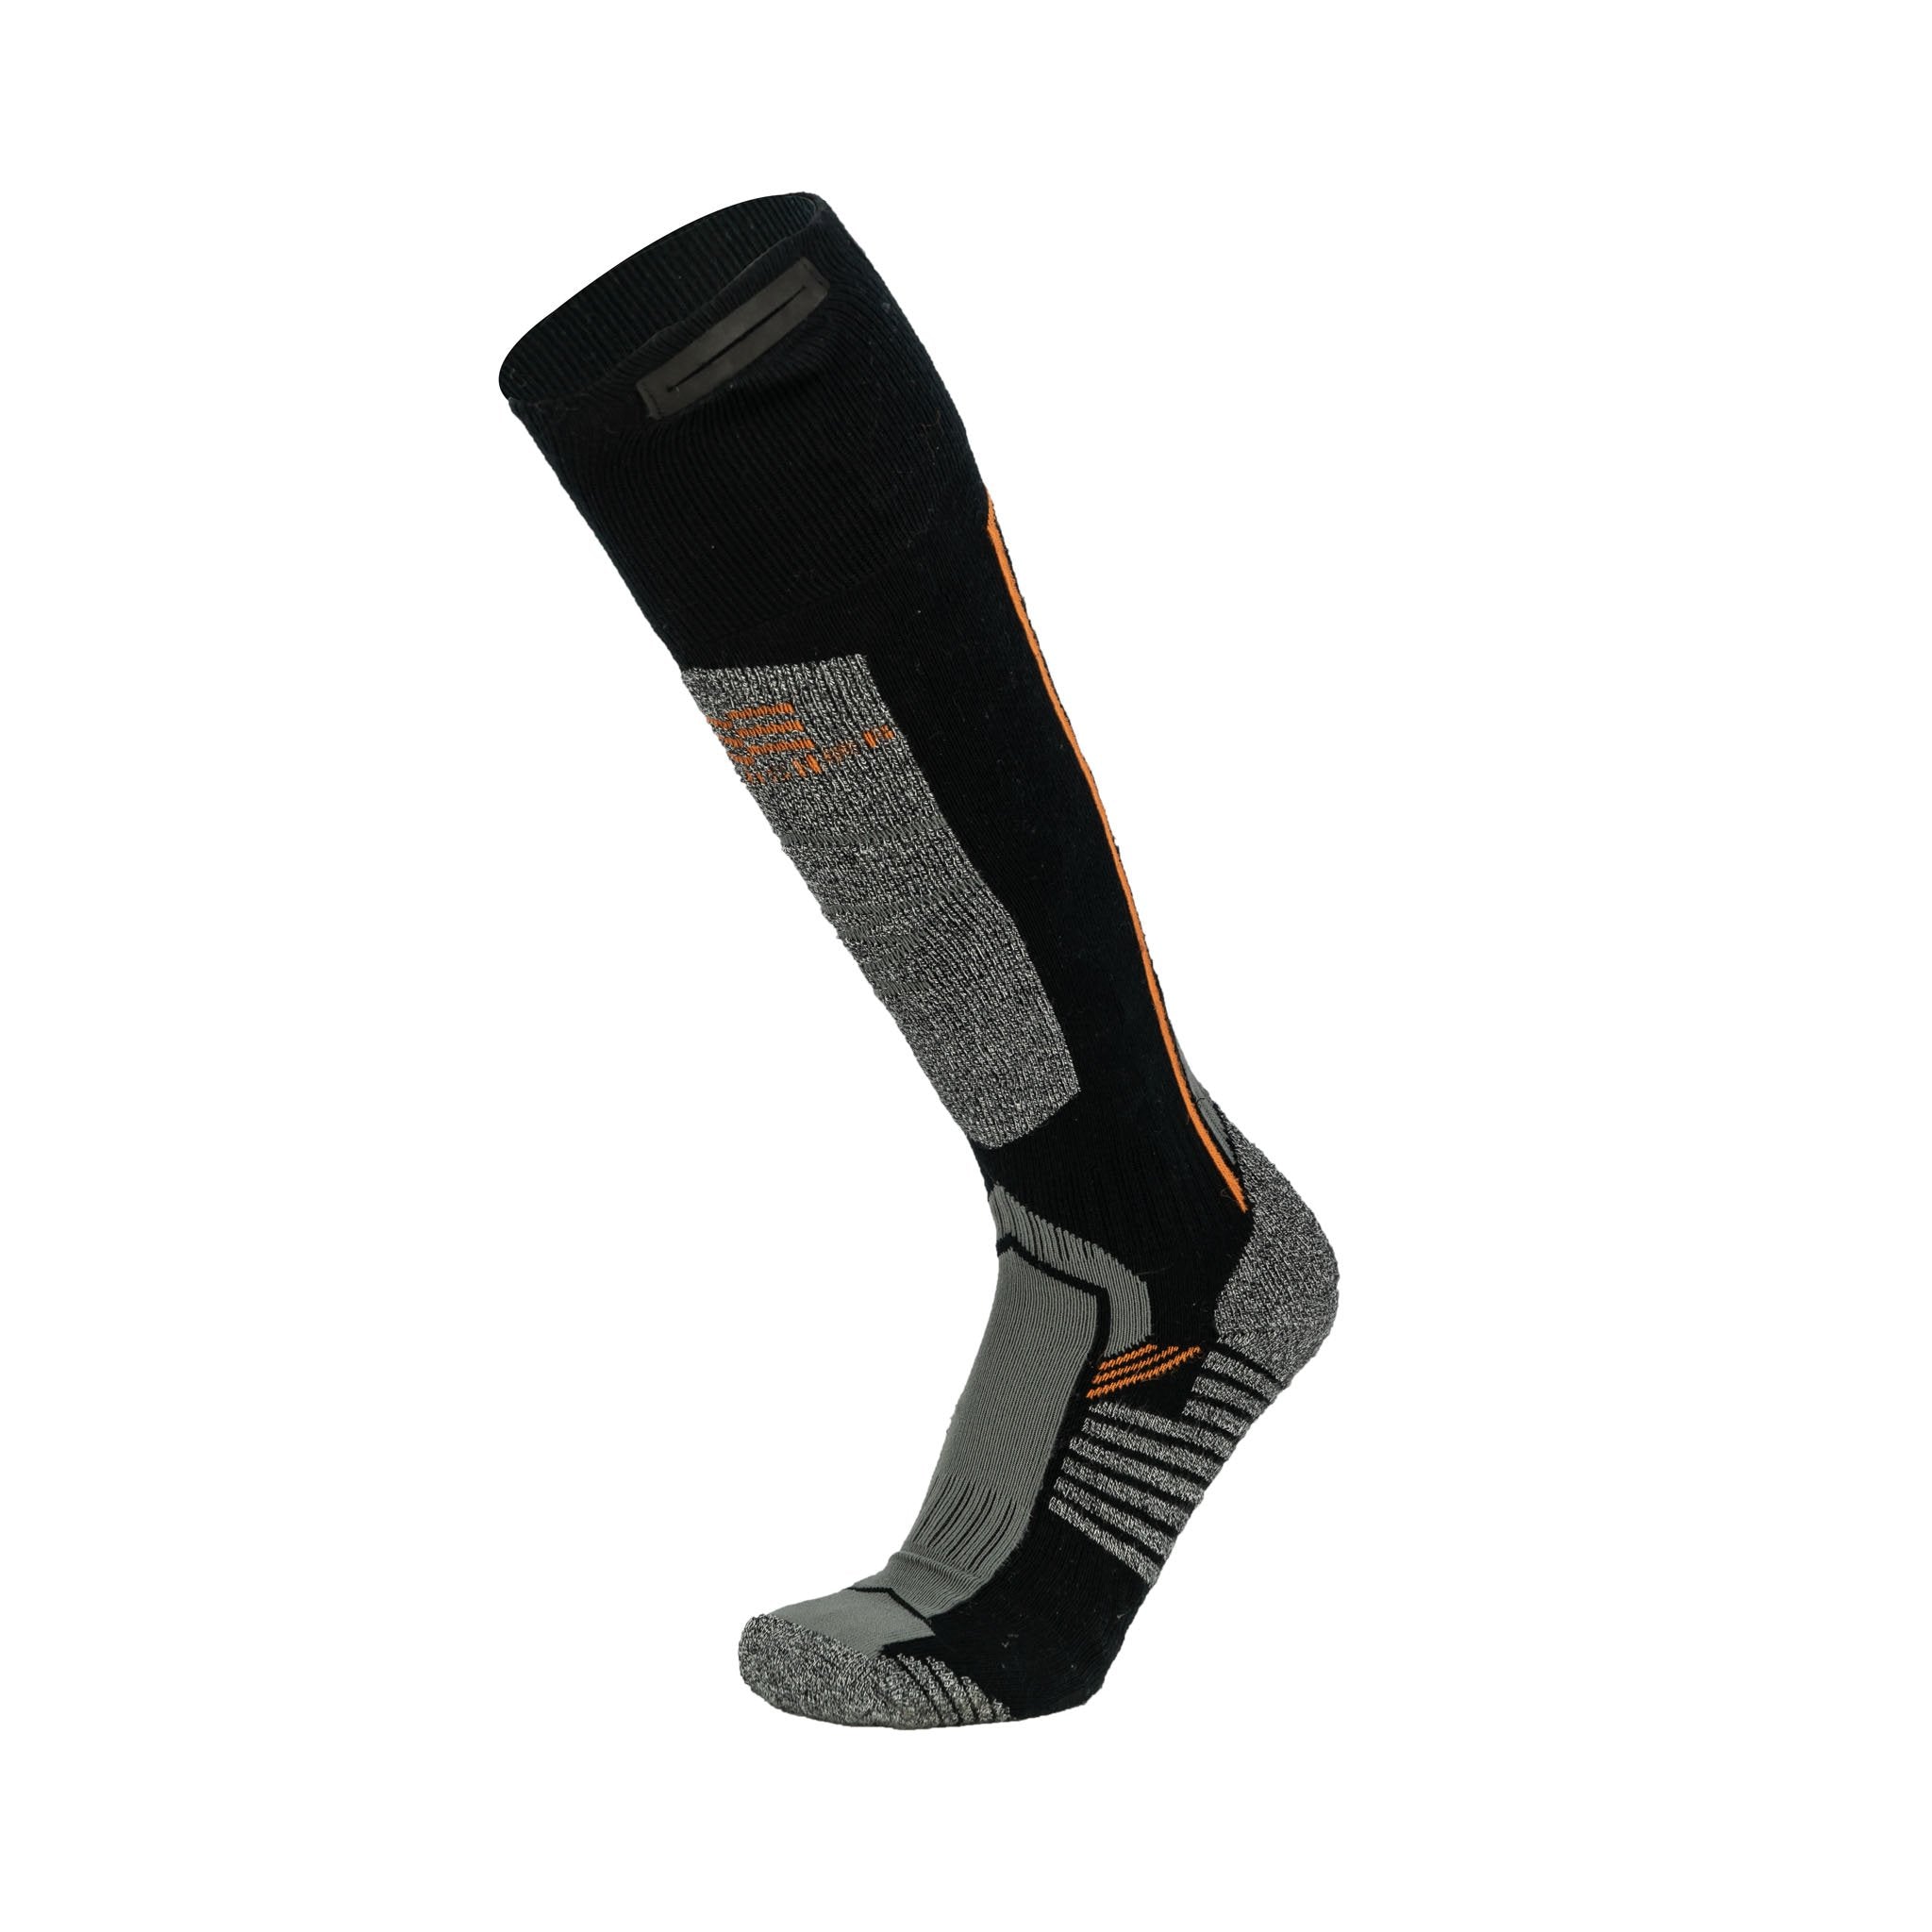 Pro Compression Heated Socks Unisex Fieldsheer, 44% OFF